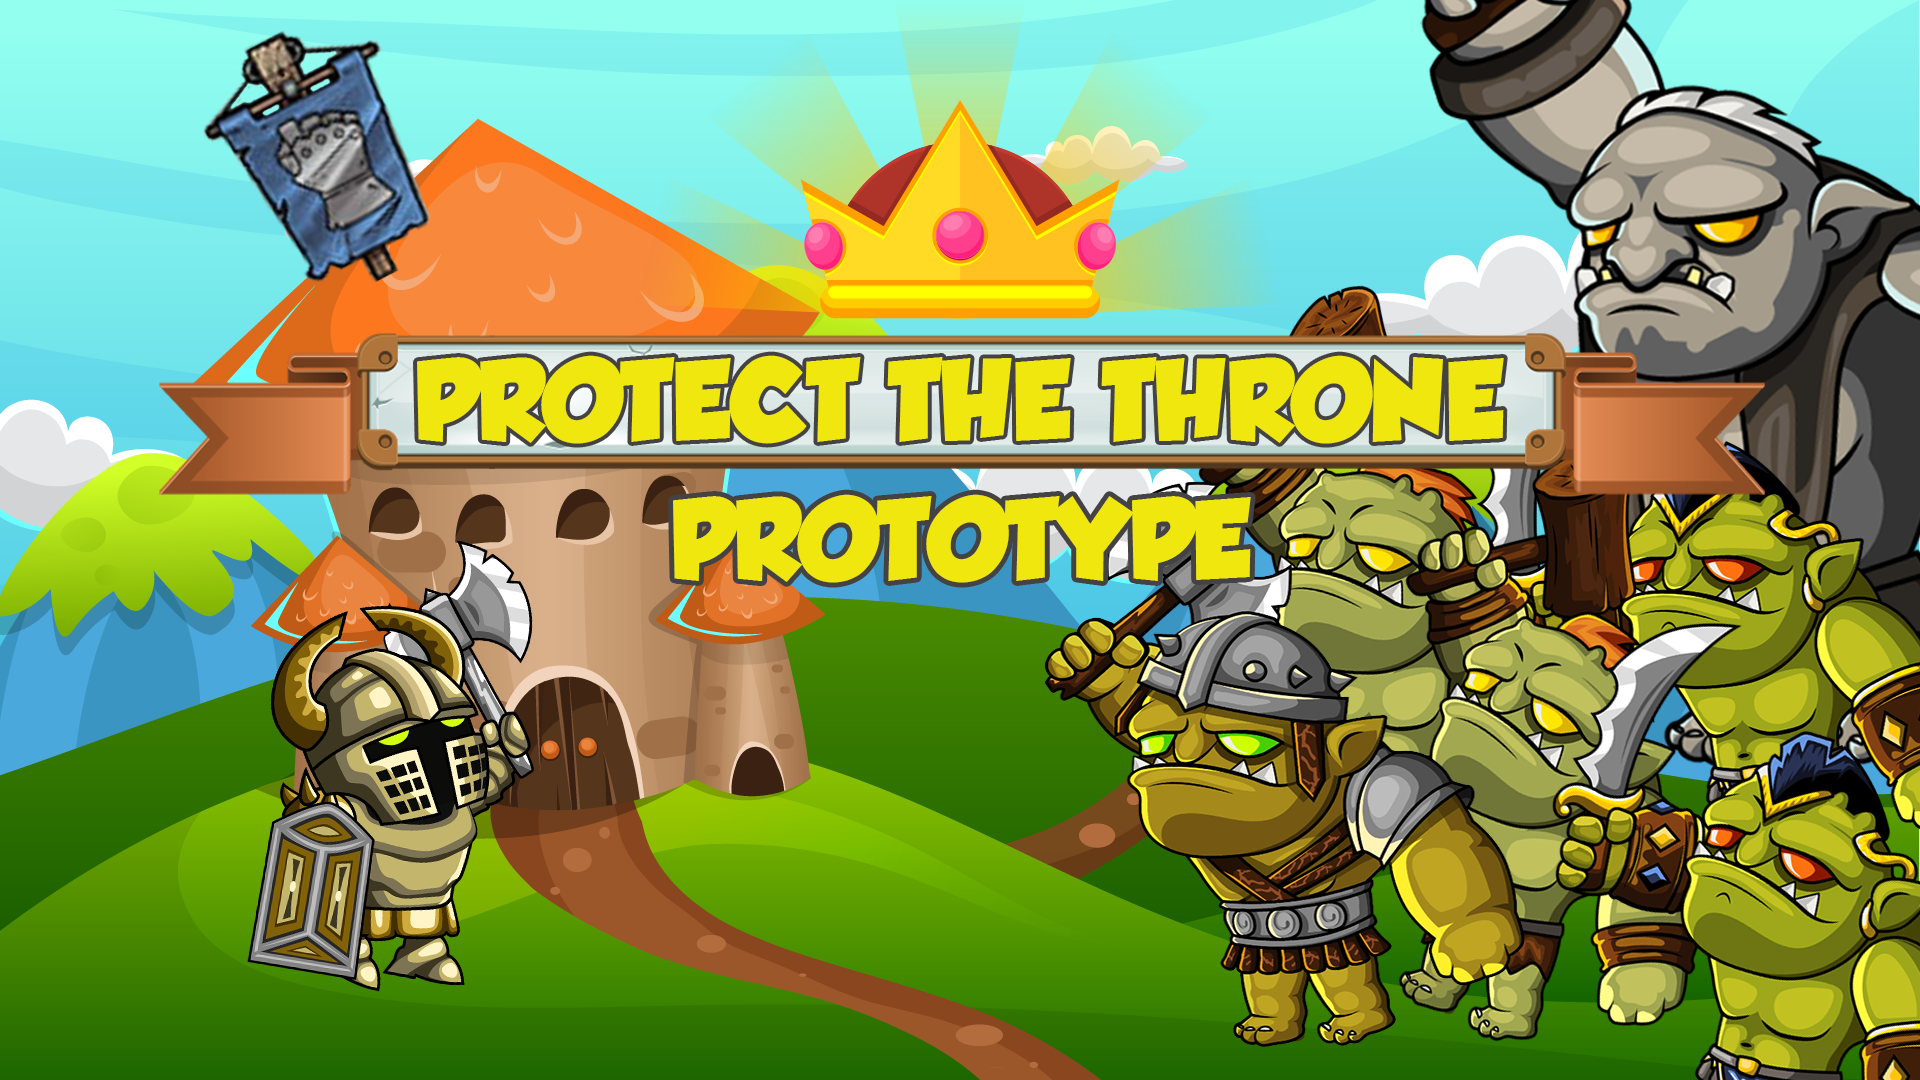 Prototype - Protect The Throne